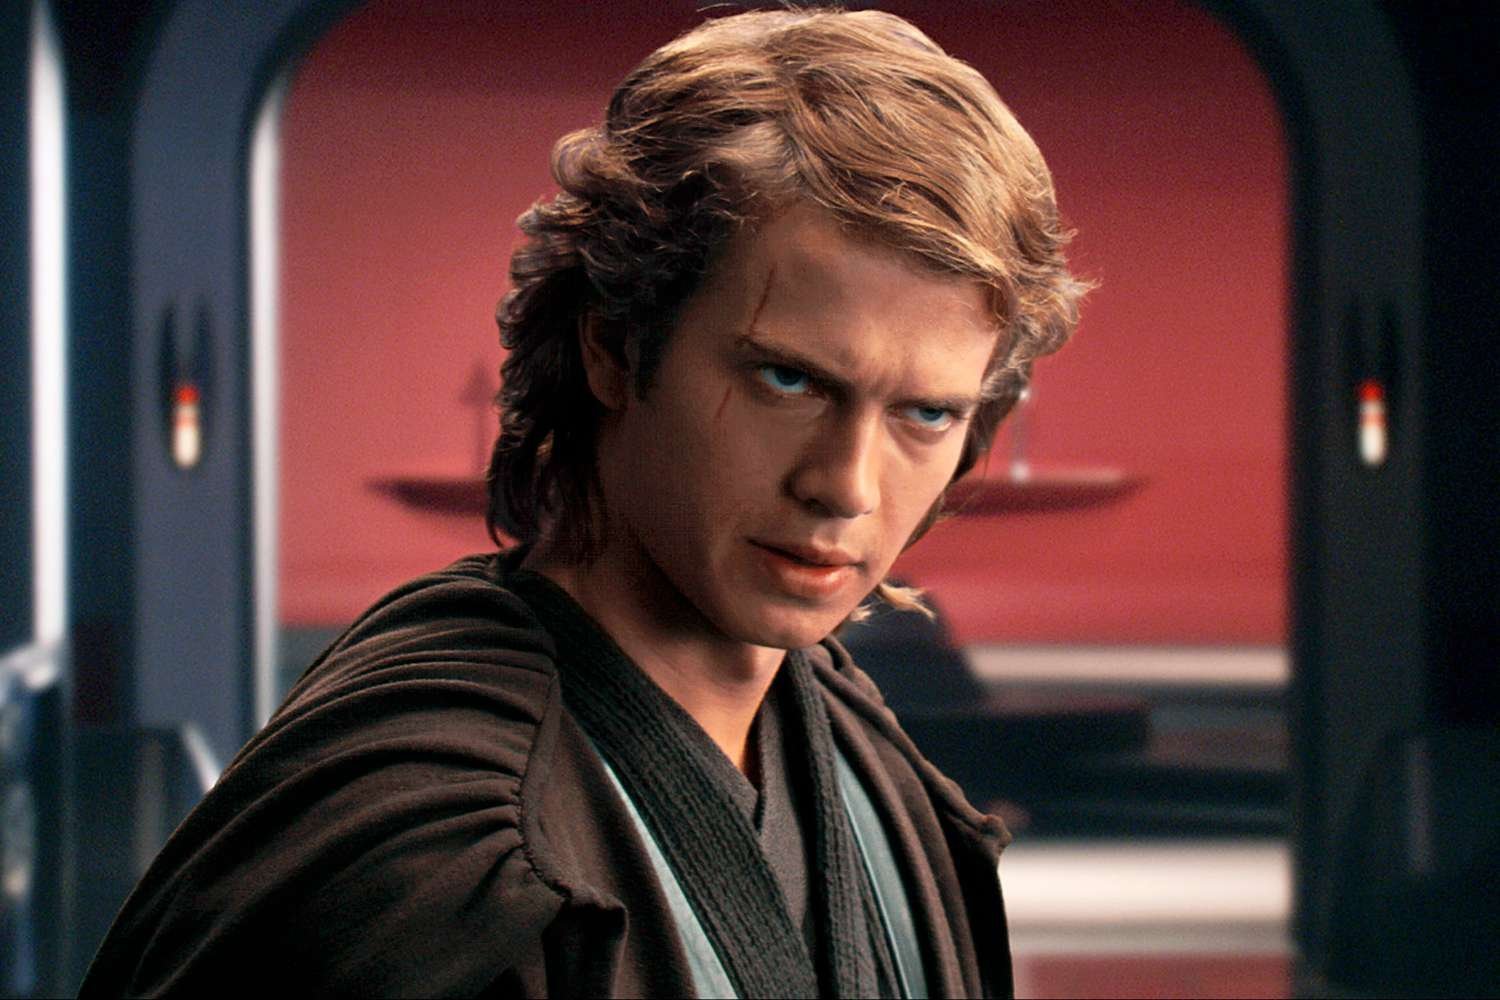 Star Wars- Was Anakin's Turn To The Dark Side Convincing?: https://analysesbydavid.com/movies/star-wars-was-anakins-turn-to-the-dark-side-convincing-tfrne-r5dj4